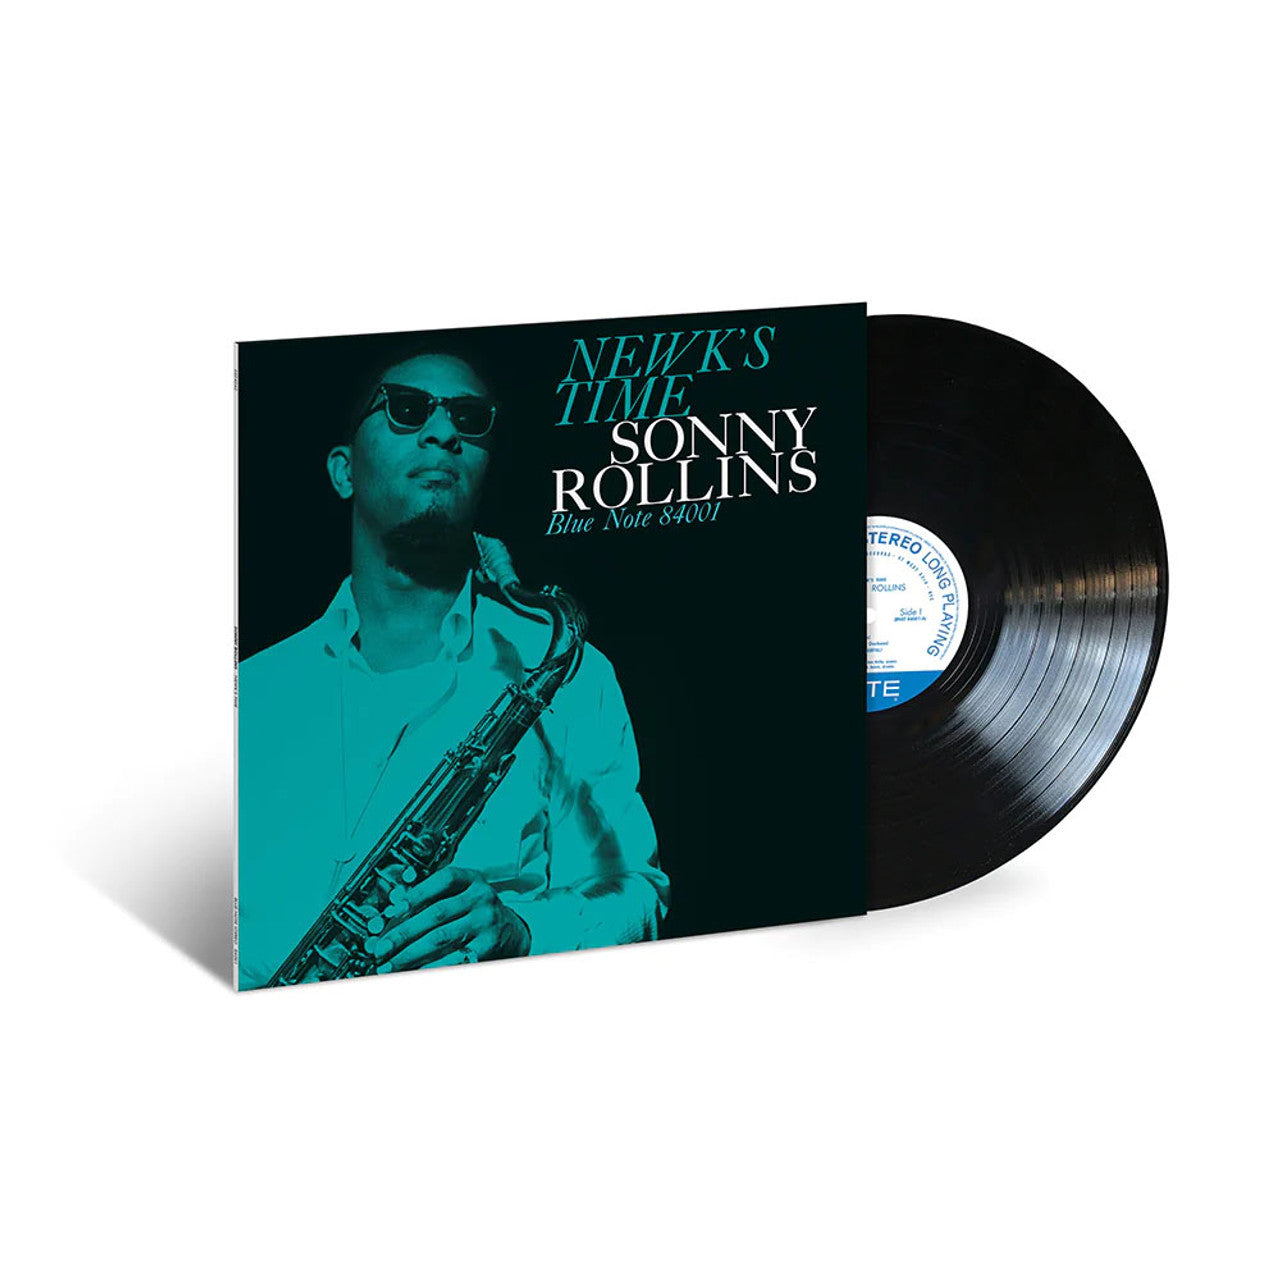 Sonny Rollins- Newk's Time (Blue Note Classic Vinyl Series)